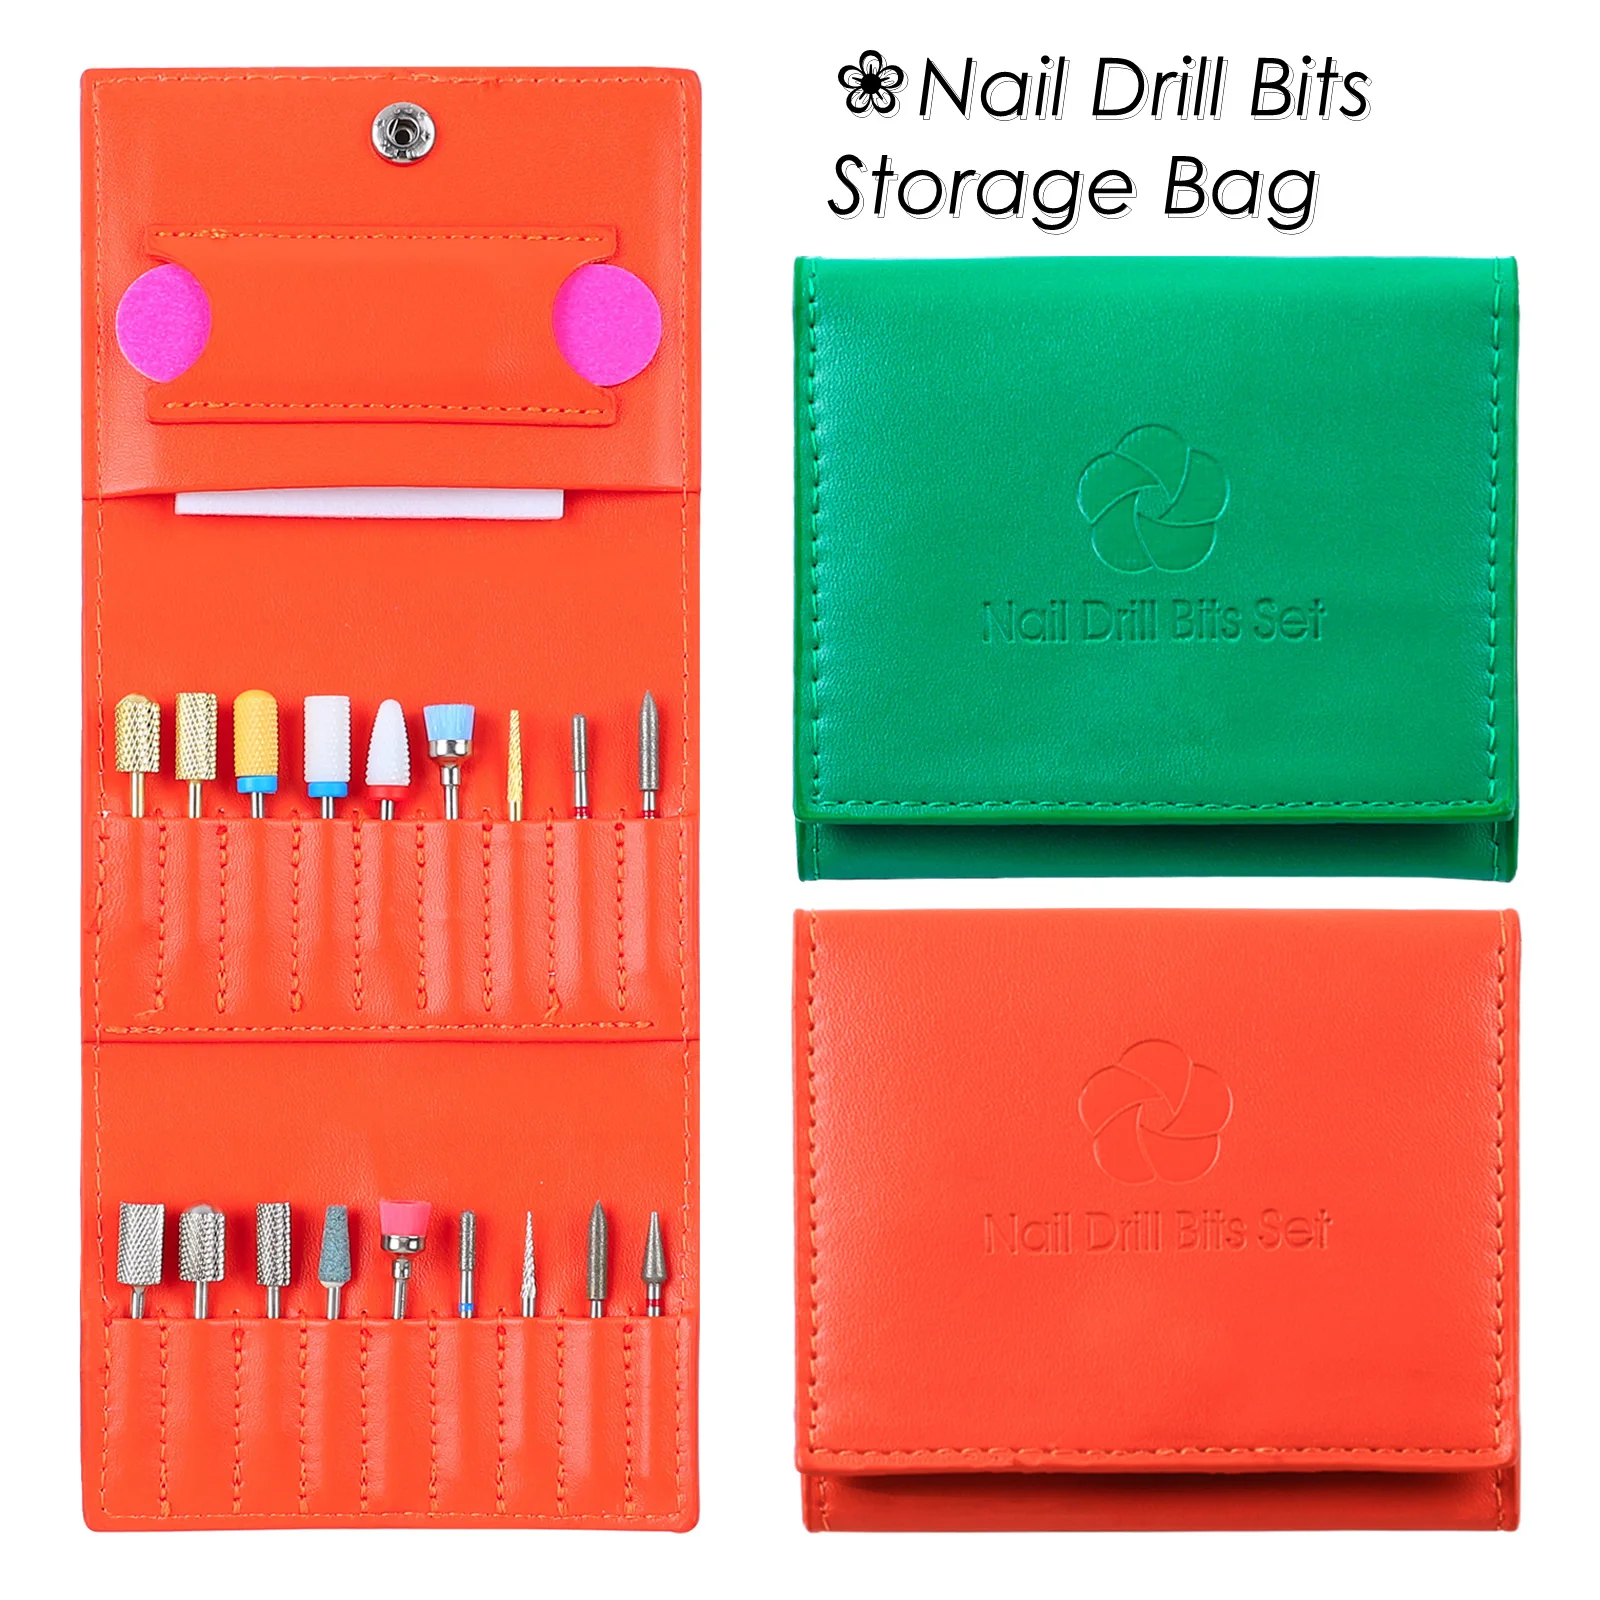 18 Holes Nail Drill Bits Holder Storage Bag Display Organizer Manicure Tools Nail Drill Grinding Bit Storage Orange Green Color